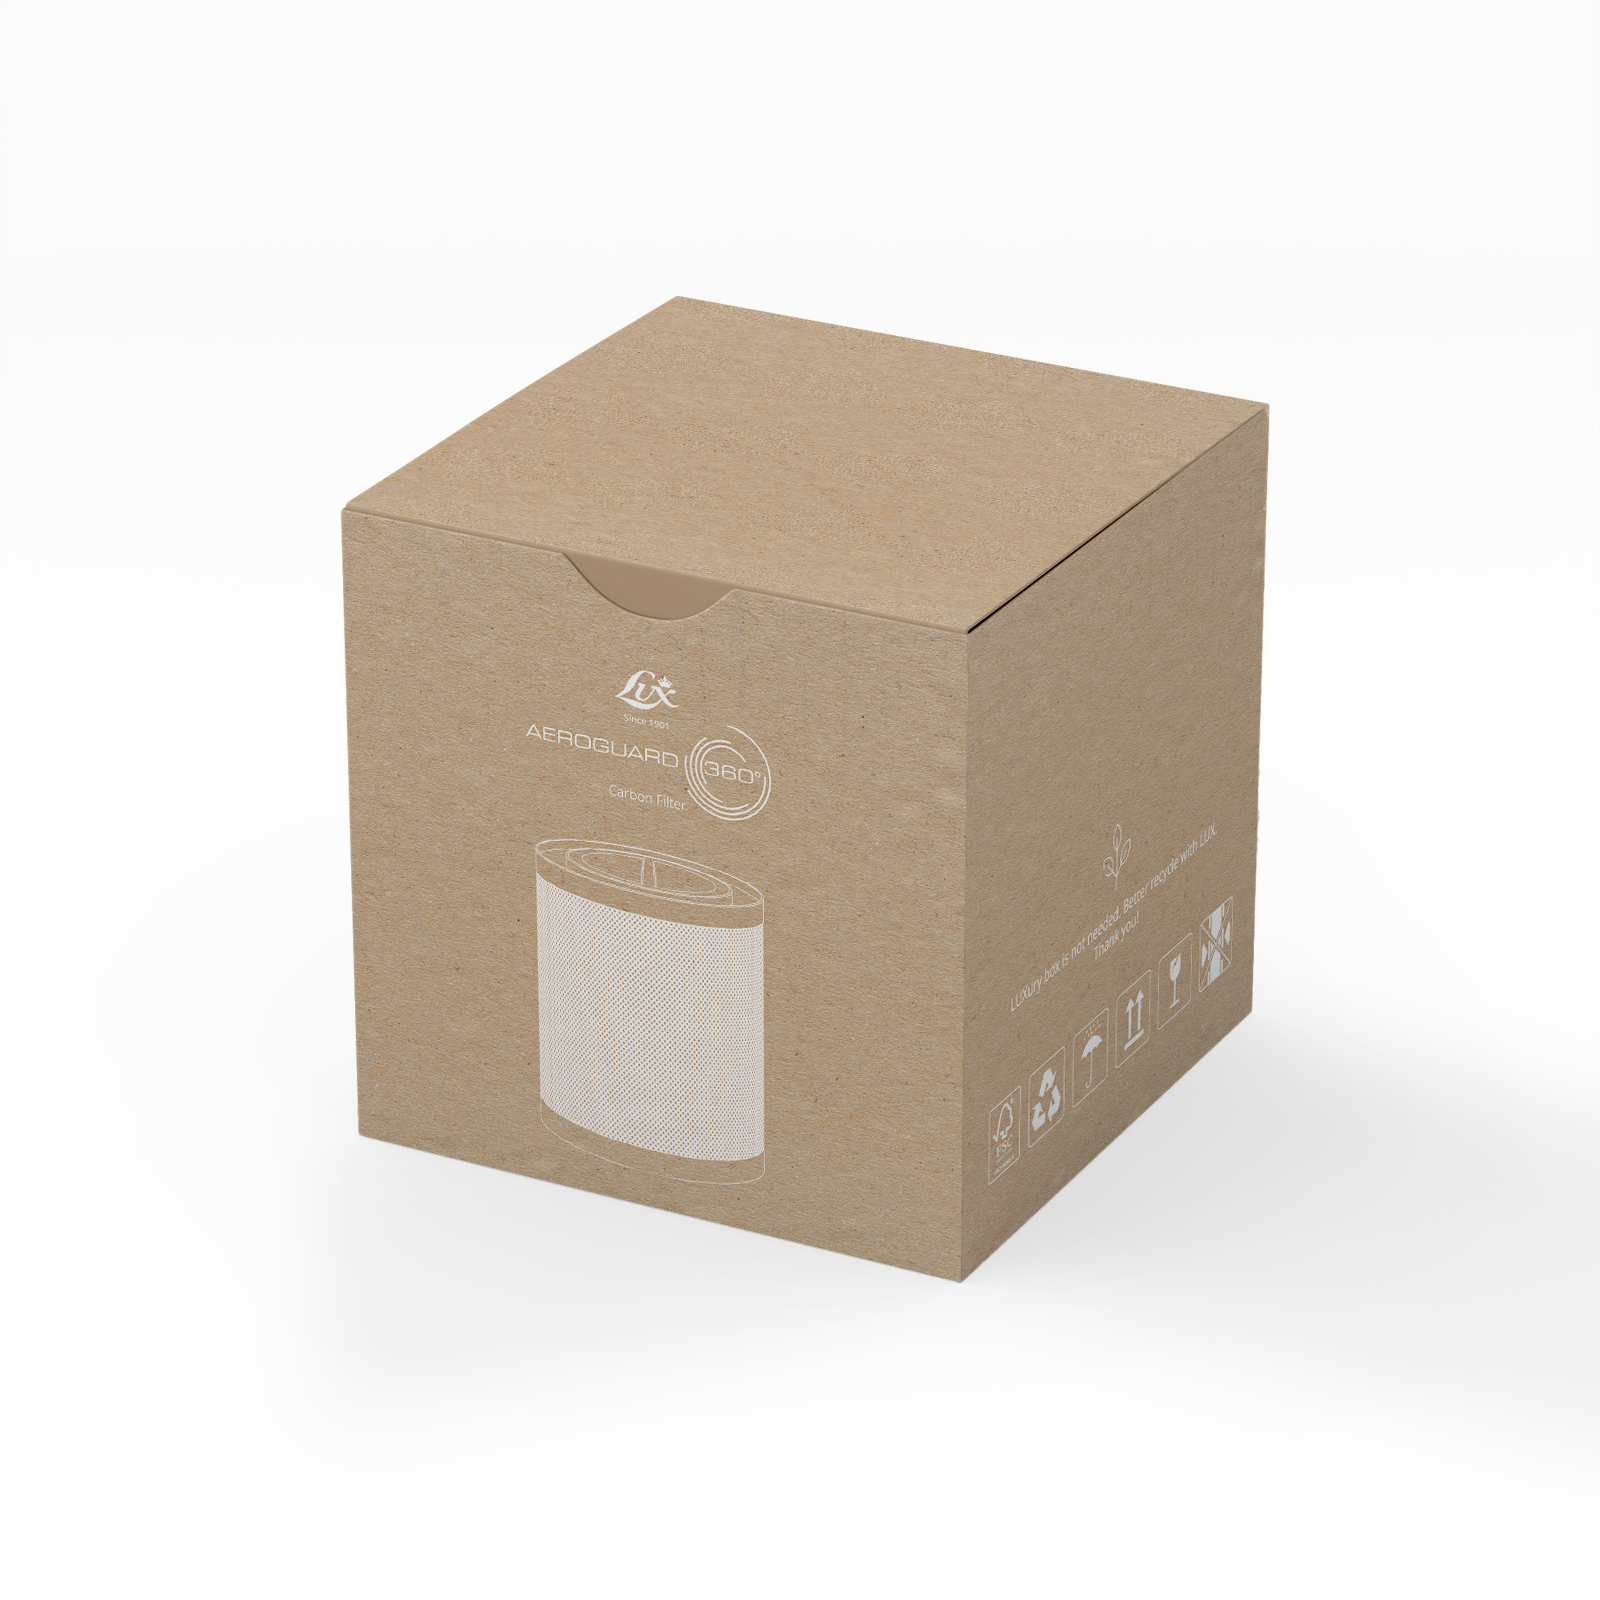 Lux Air Purifier packaging